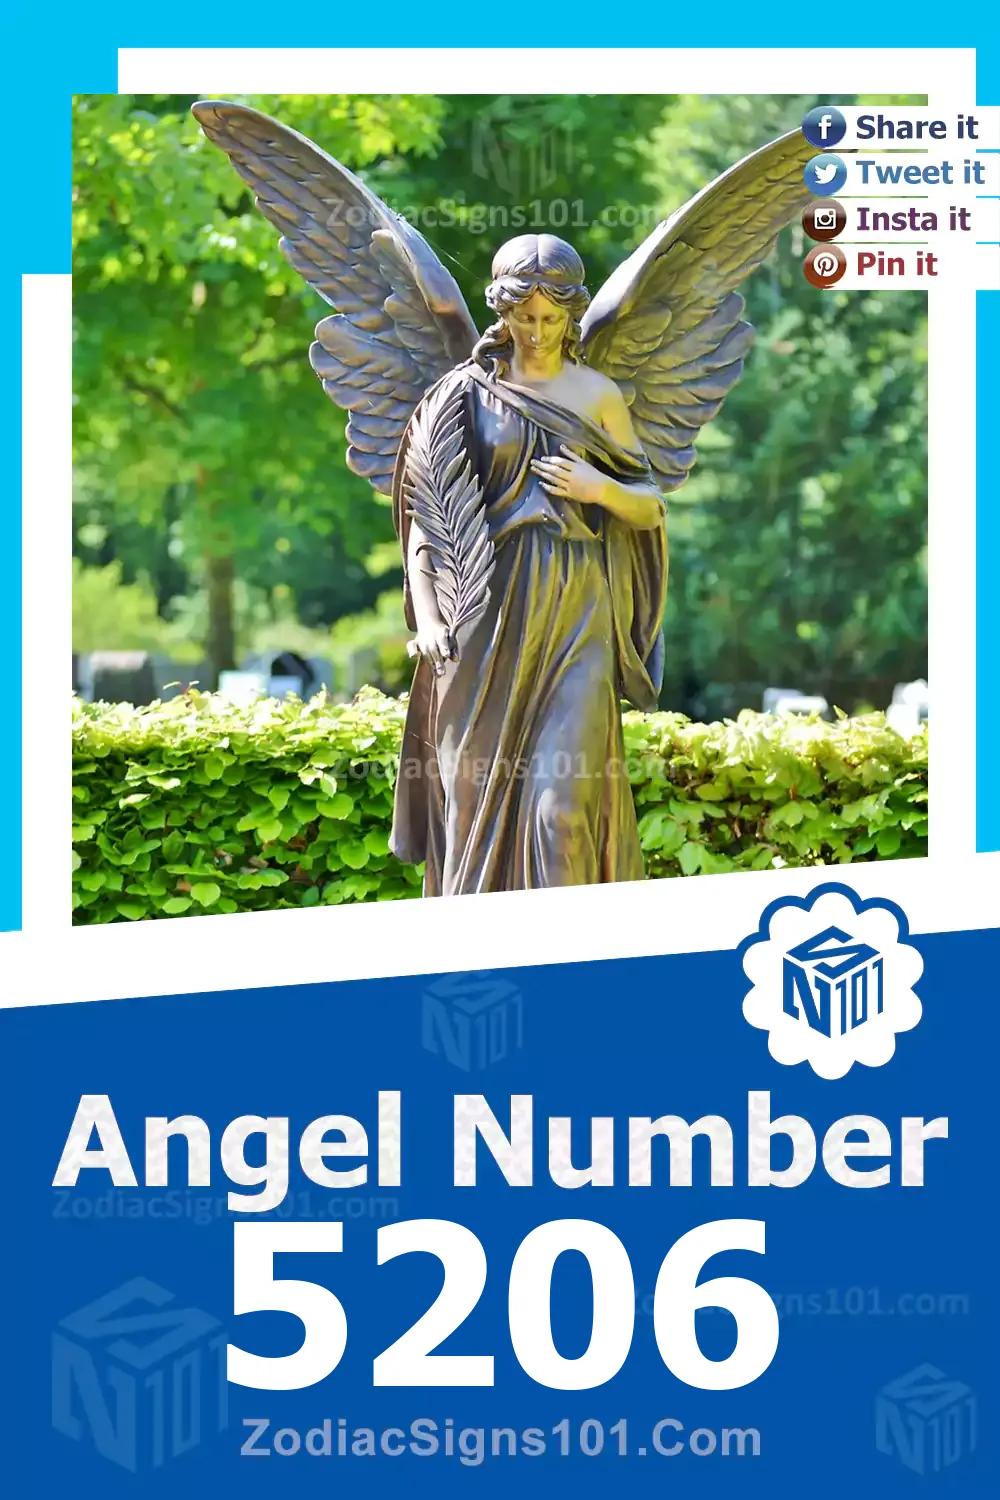 5206-Angel-Number-Meaning.jpg